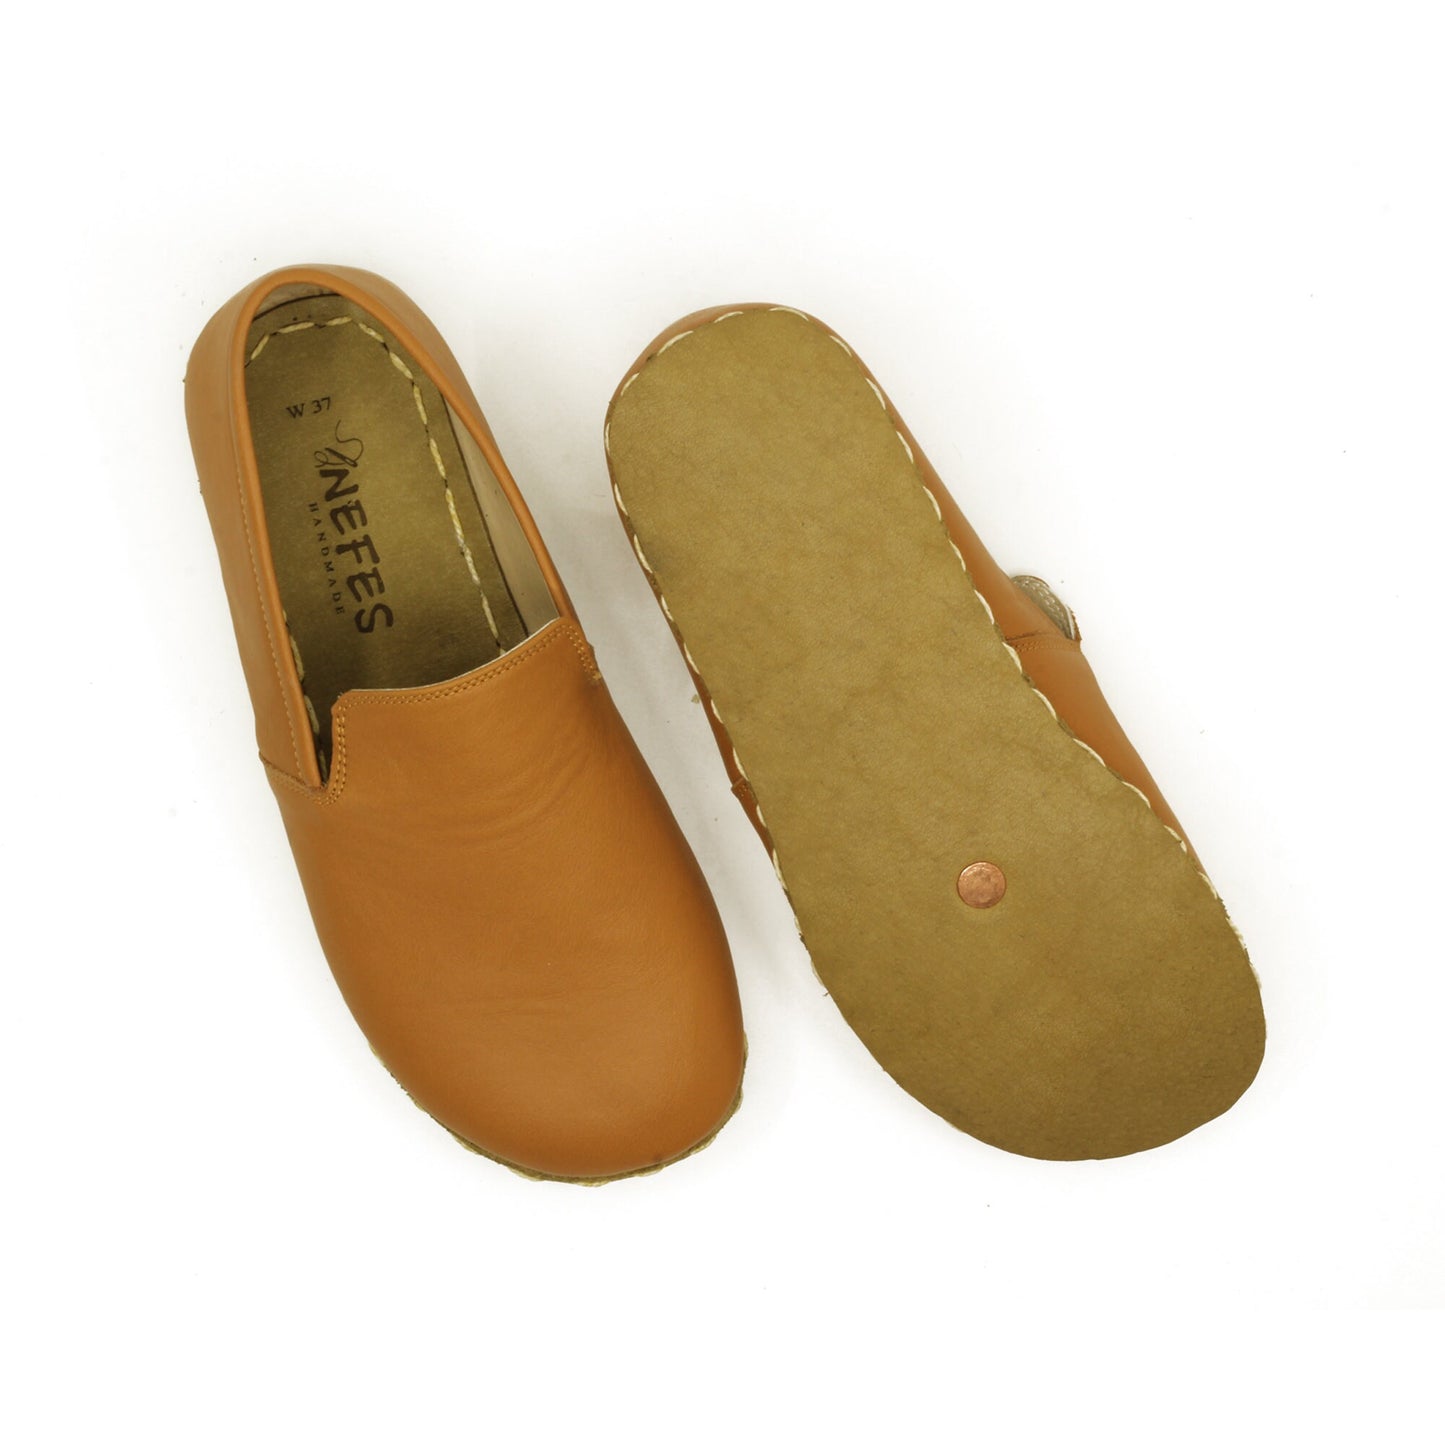 Women - Handmade - Barefoot - Leather Shoes, Modern - Light Orange